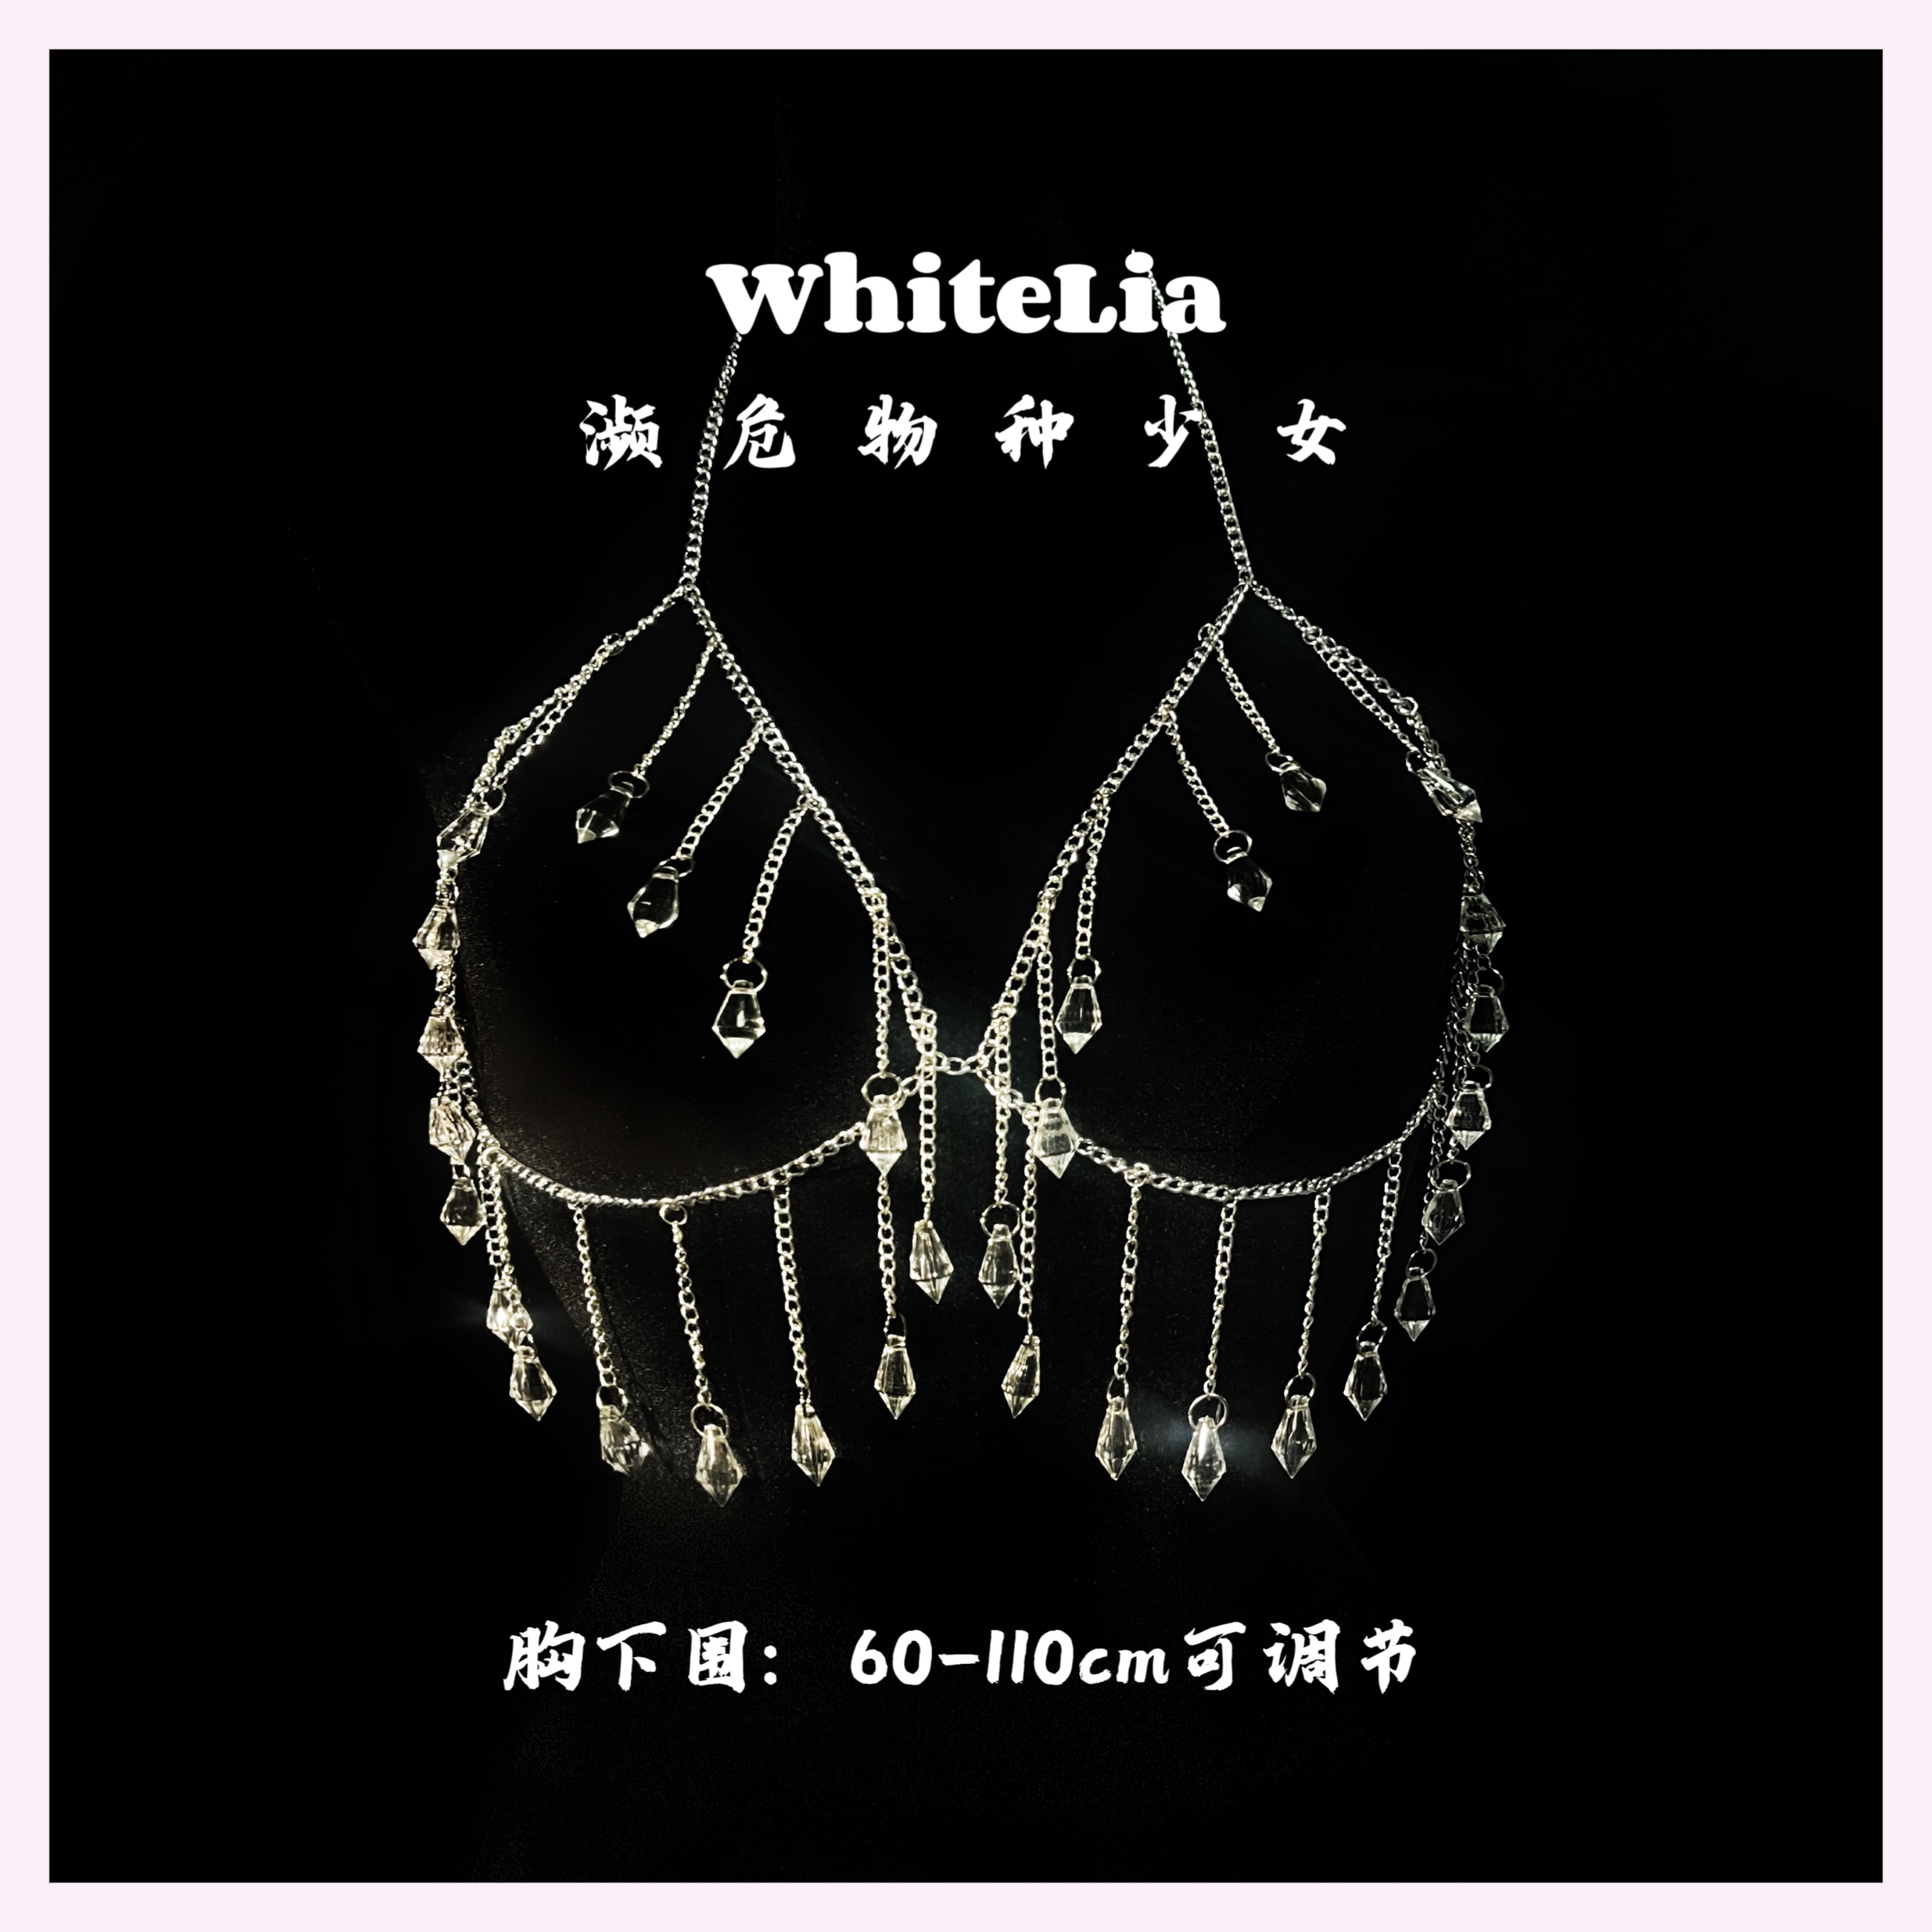 WhiteLia「晶」重工原创手作宝石水晶透明性感镂空胸链腰链身体链 - 图3